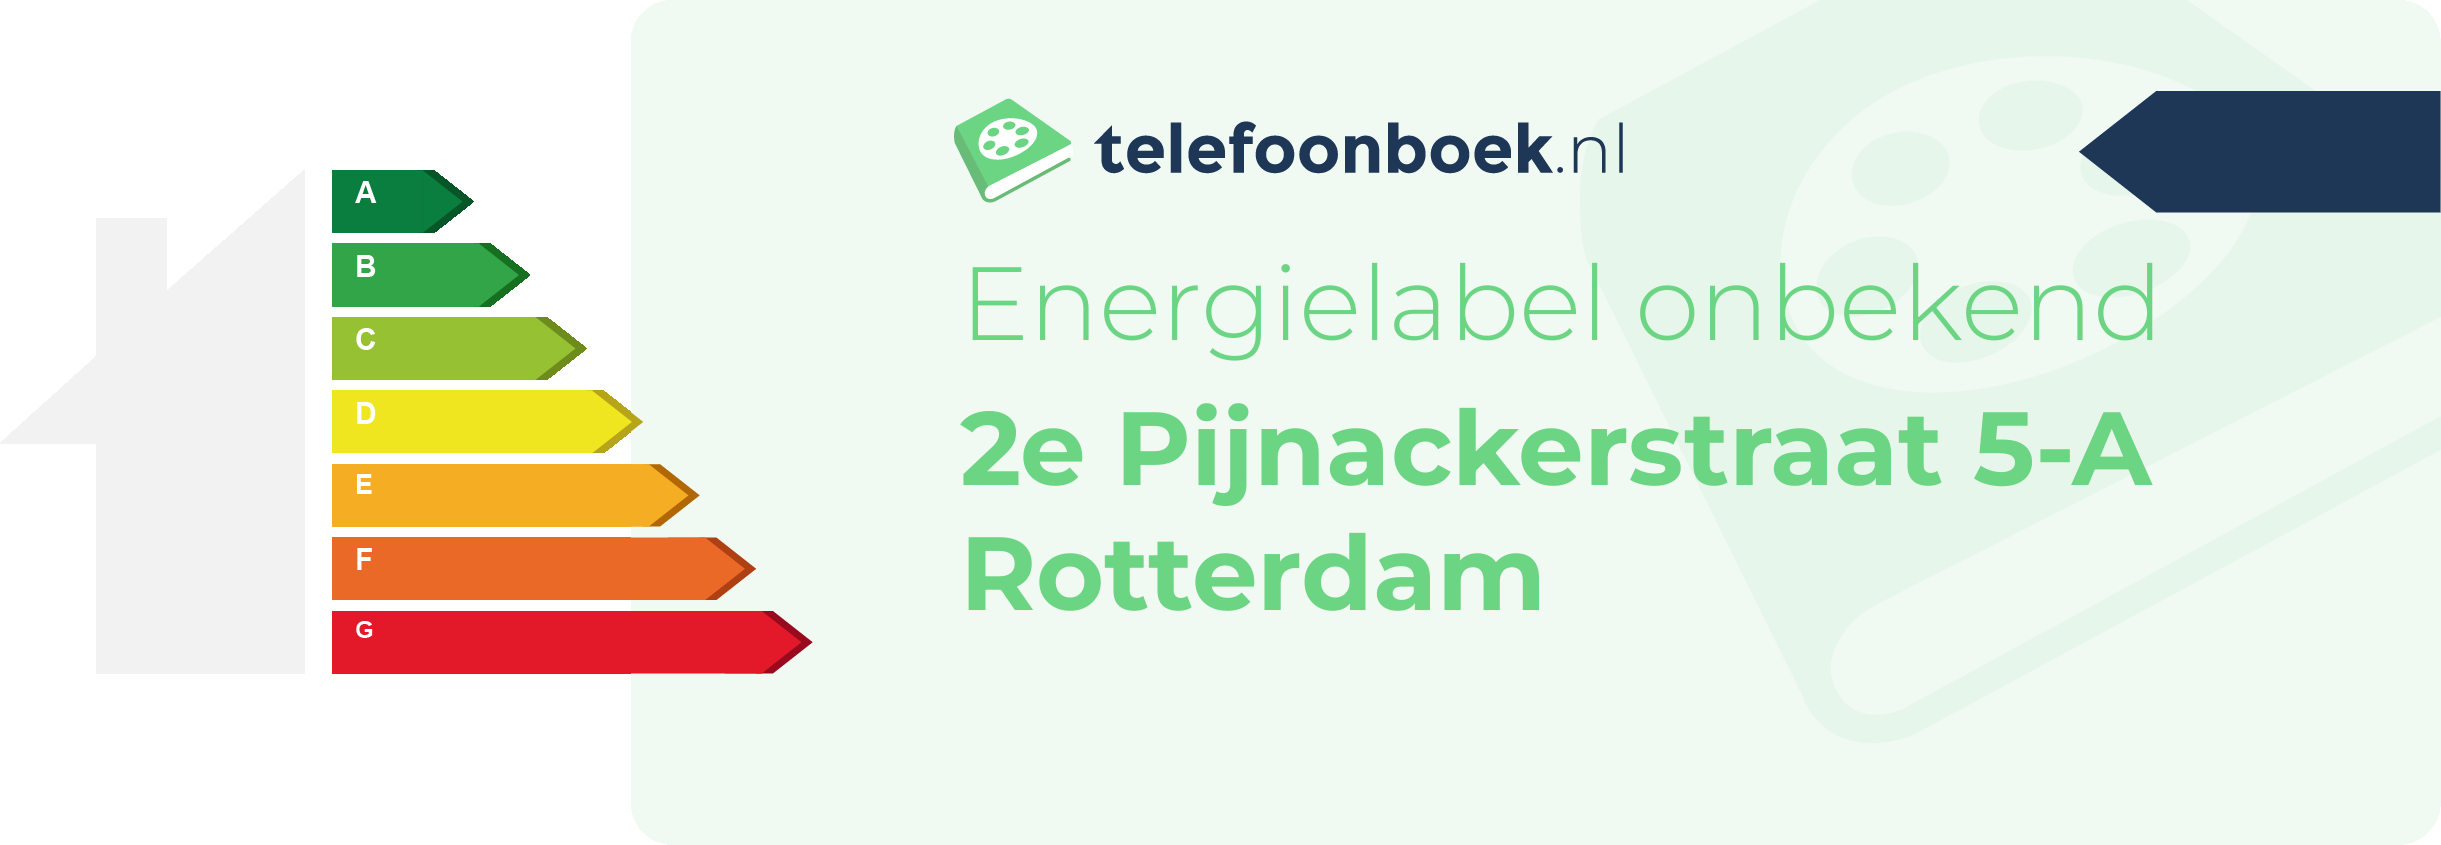 Energielabel 2e Pijnackerstraat 5-A Rotterdam